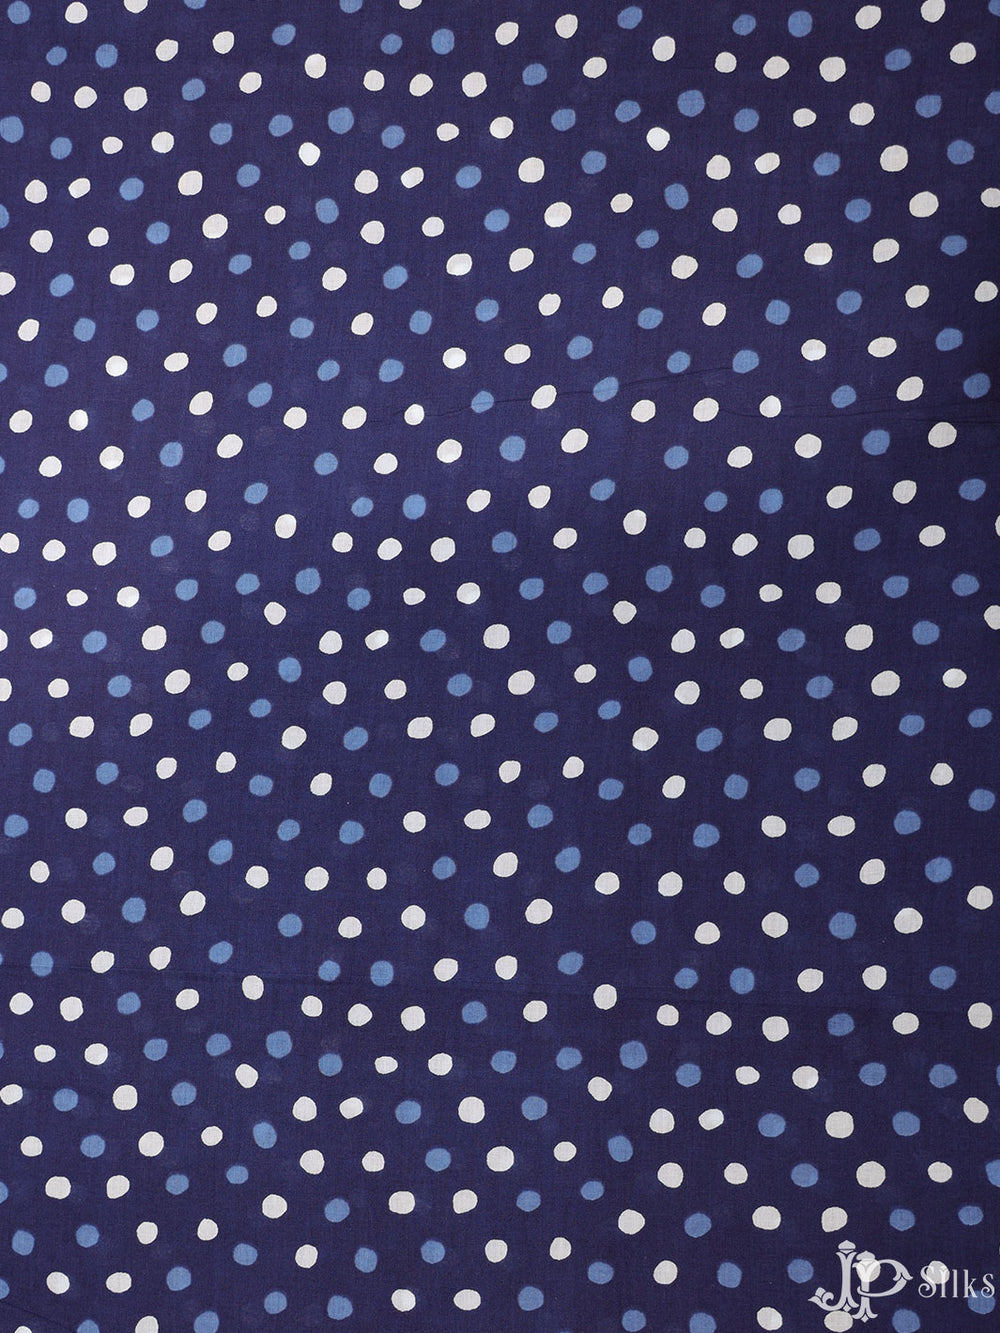 Navy Blue Polka Dots Cotton Fabric - D1785 - View 1